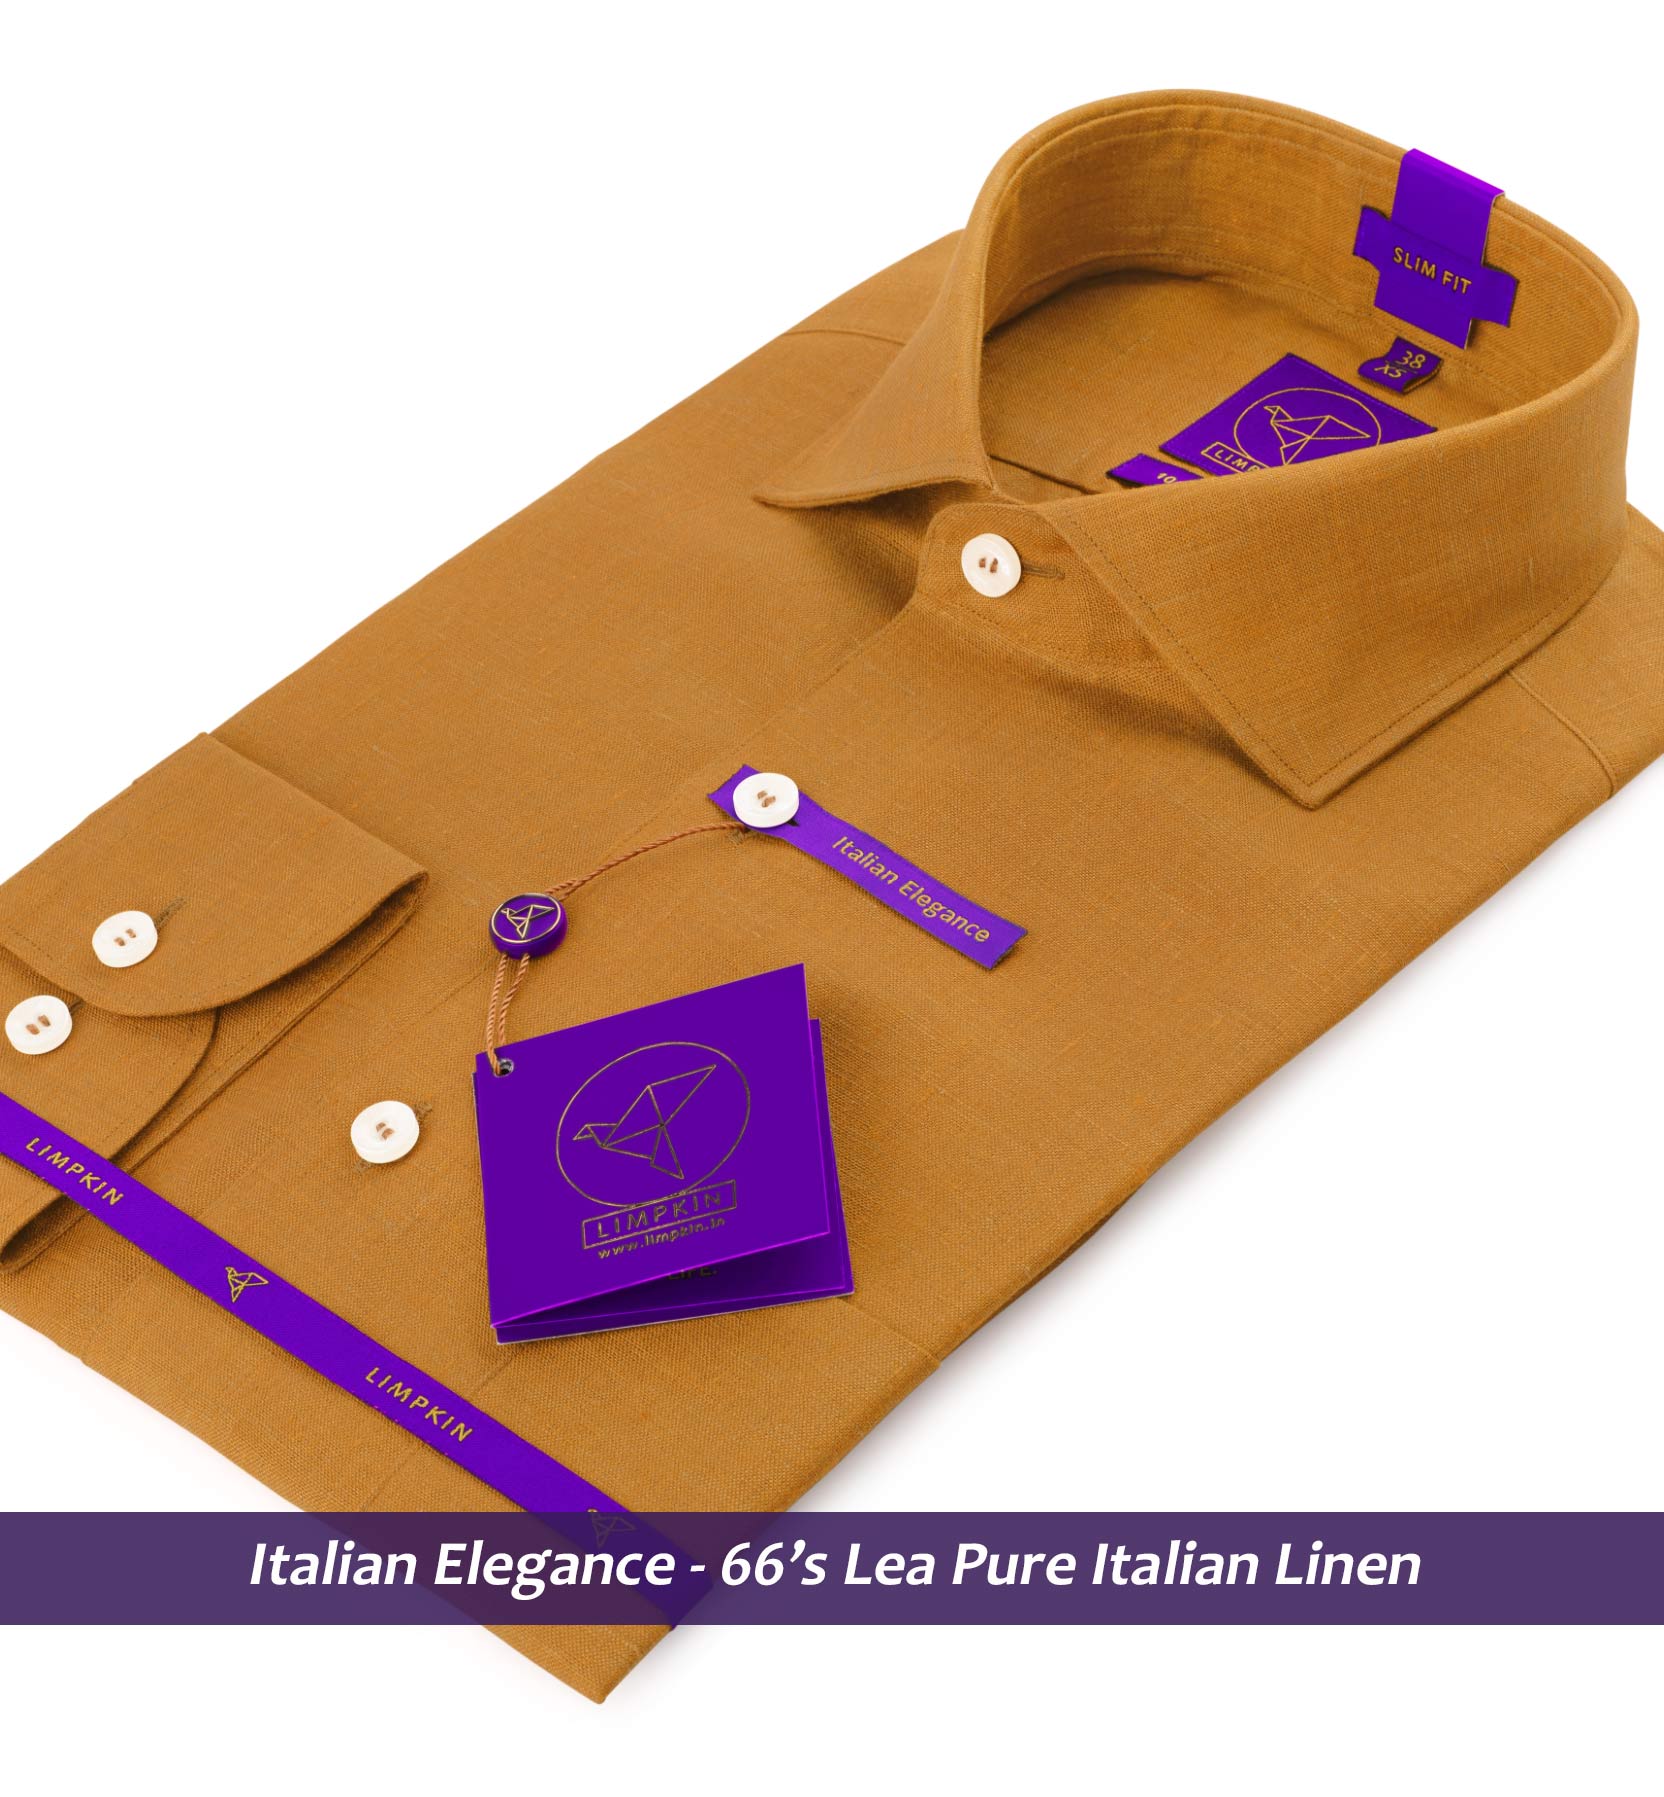 Moscow- Caramel Solid Linen- 66's Lea Pure Italian Linen